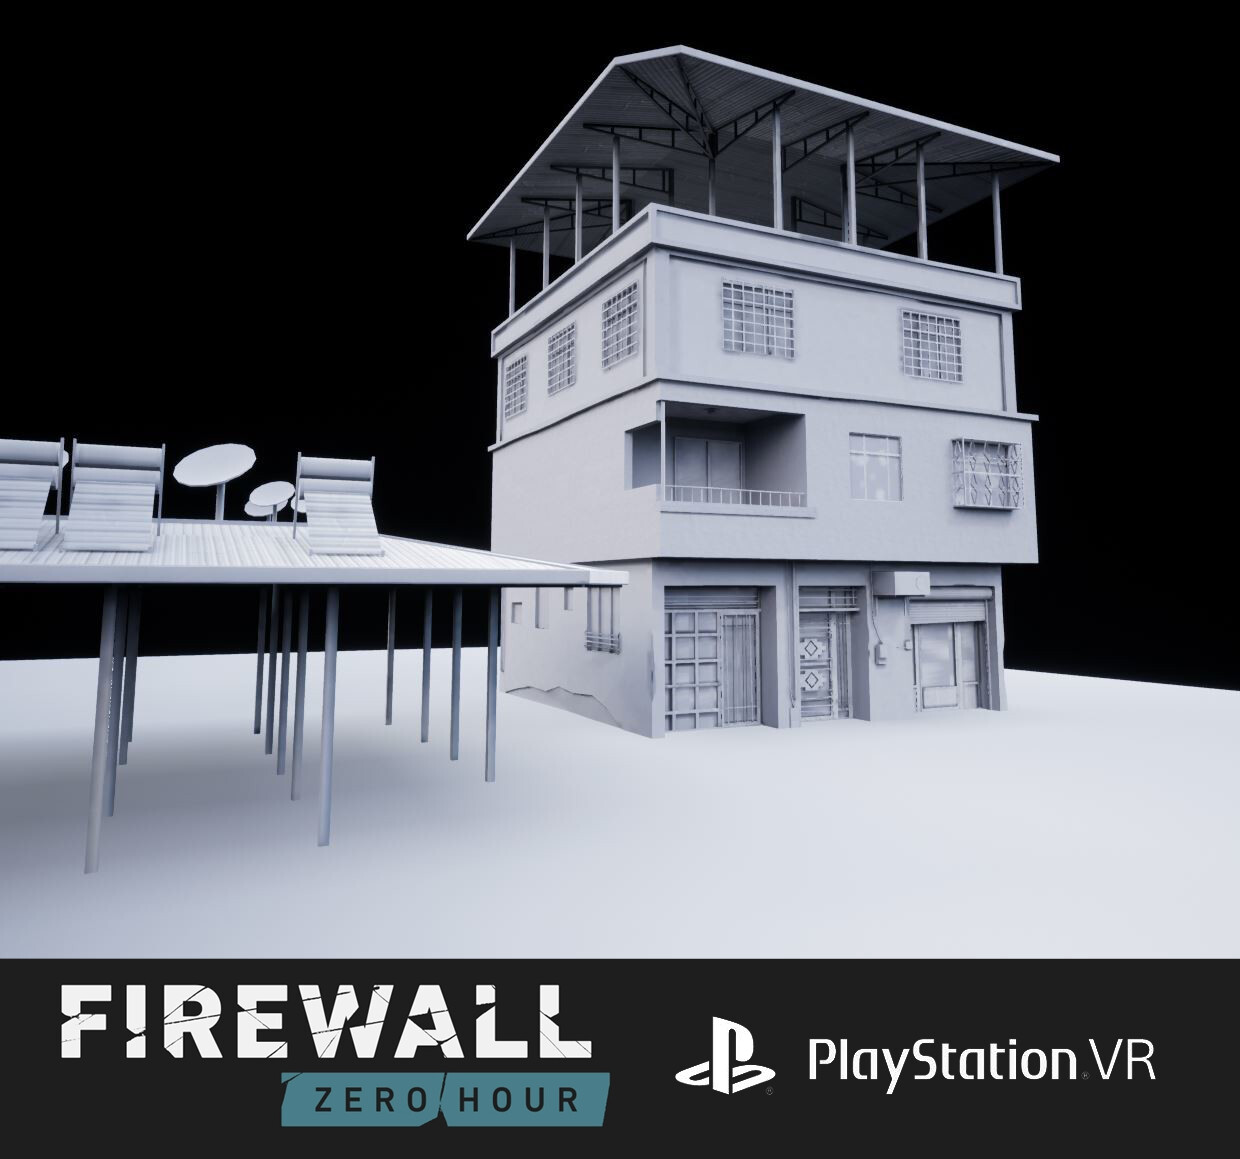 FireWall:Zero Hour PlayStation VR assets